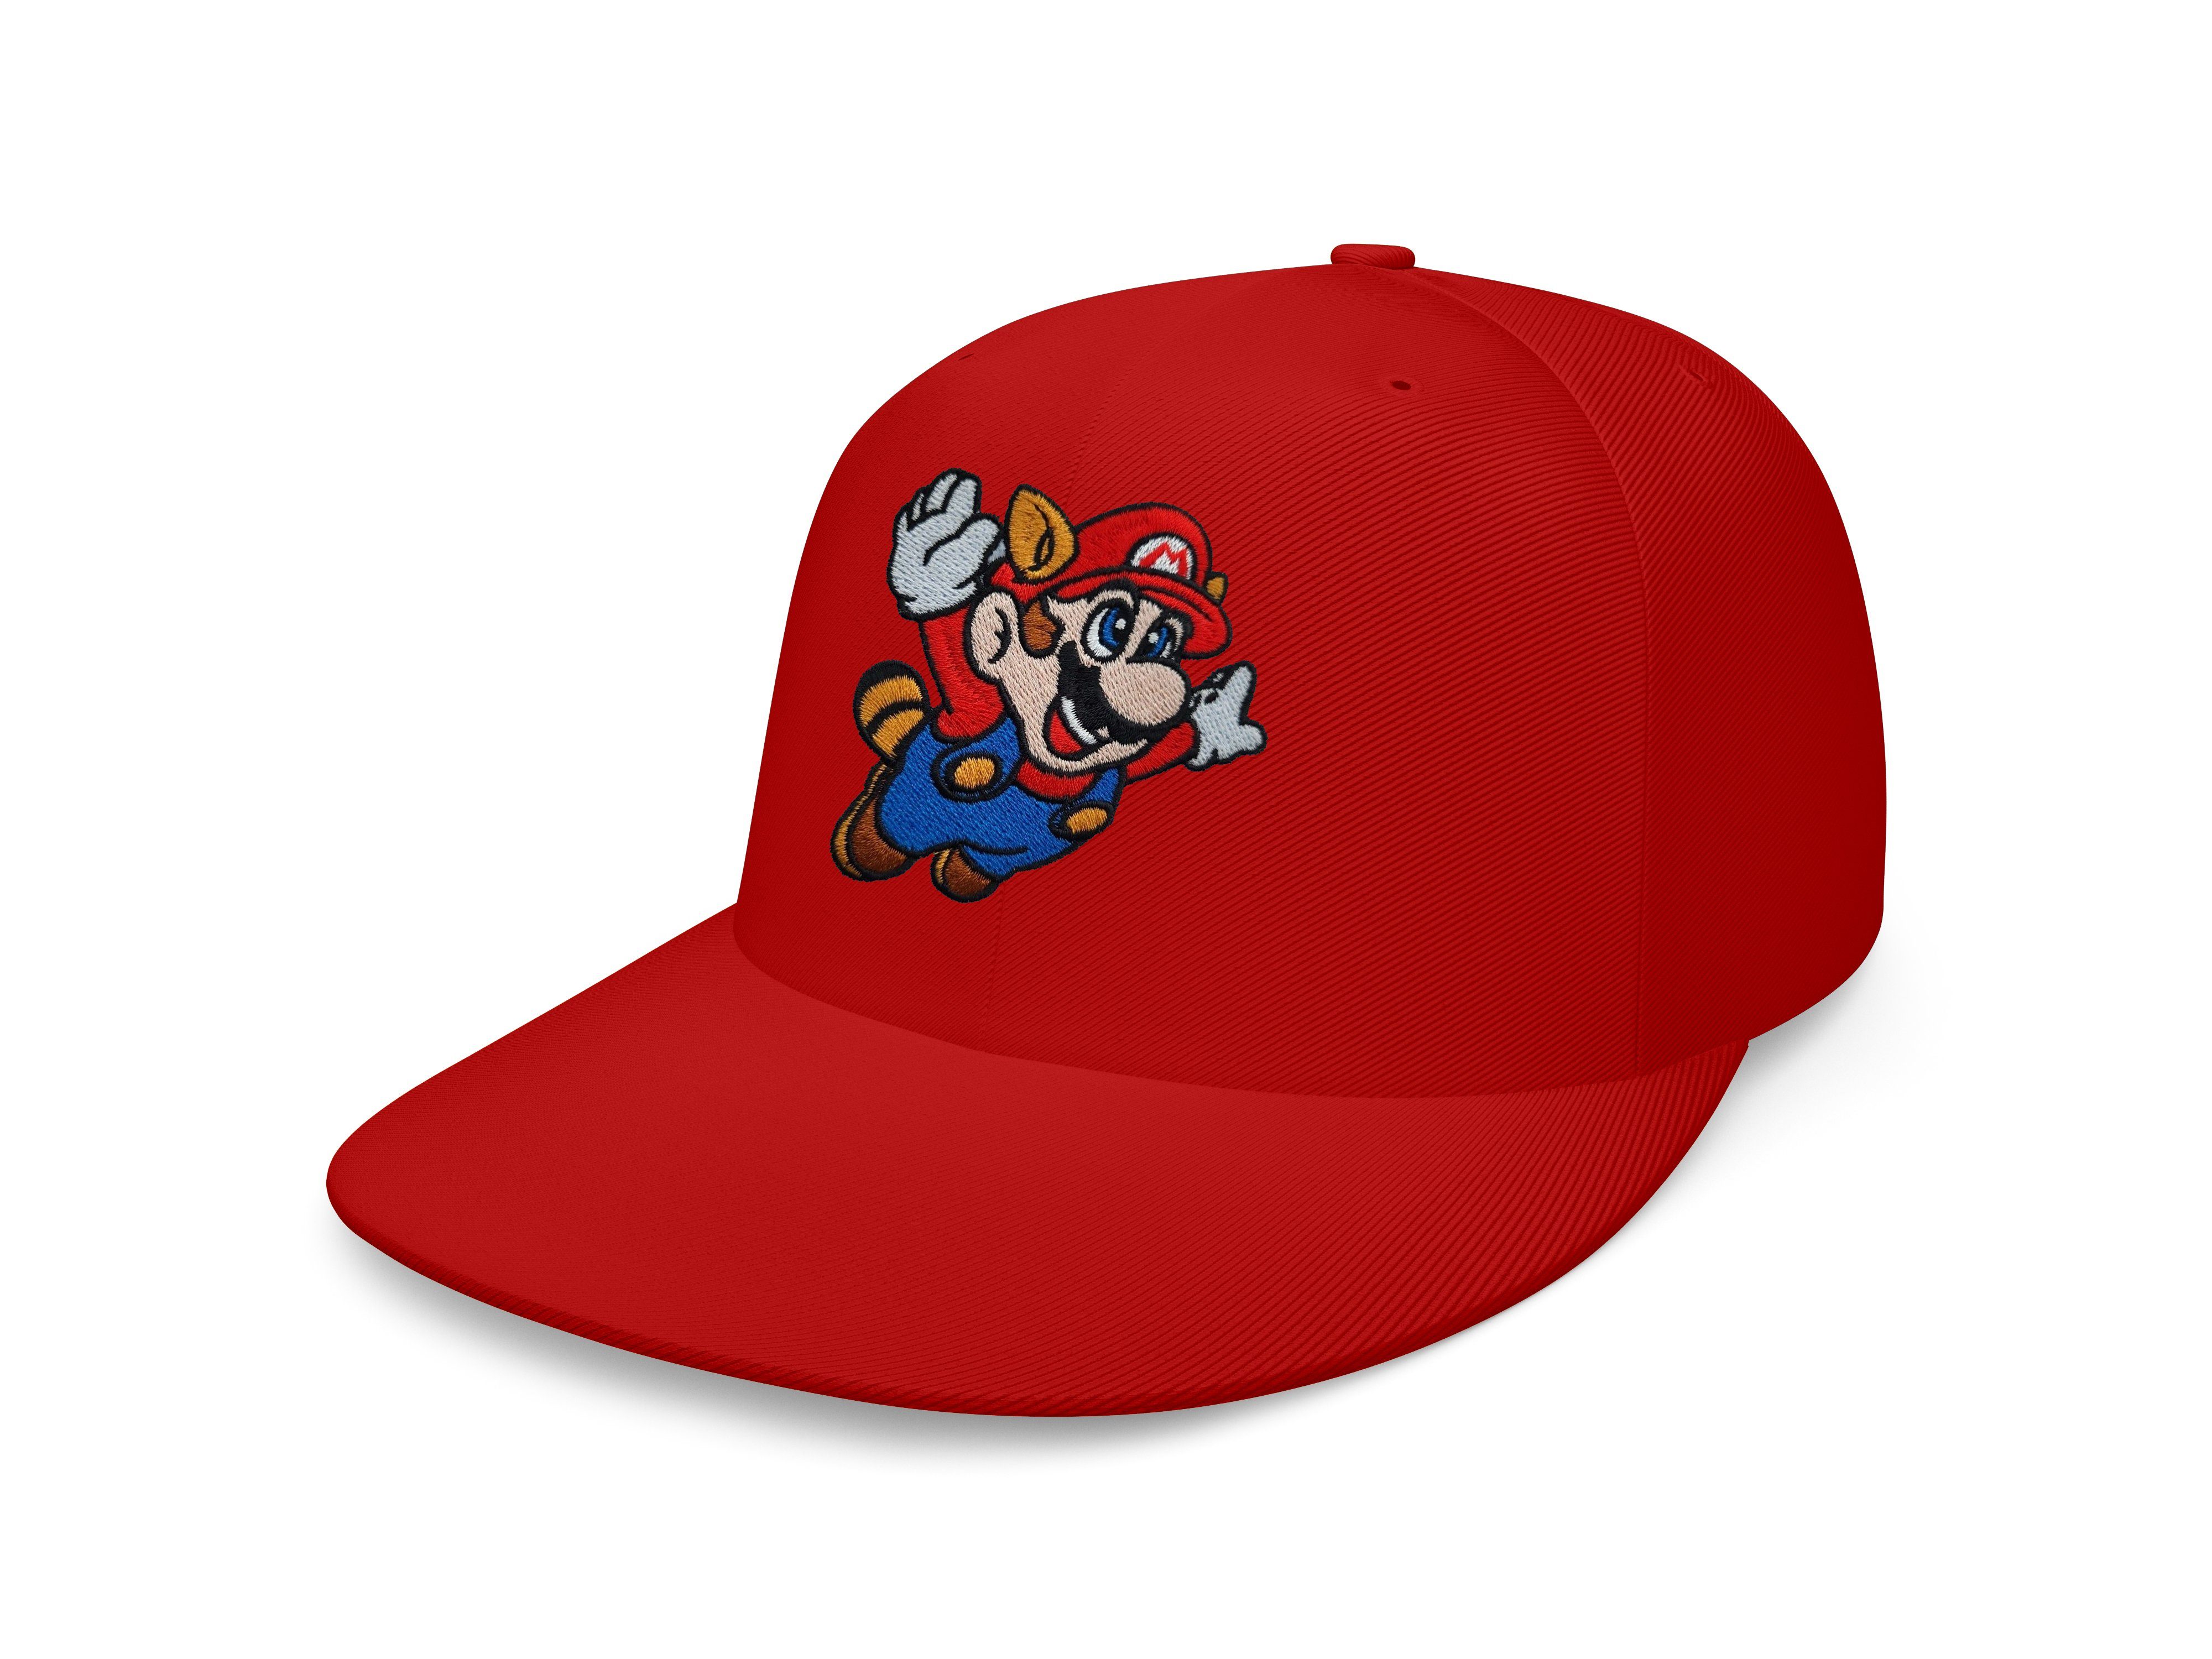 Blondie Luigi Mario & Patch Nintendo Rot Fligh Stick Erwachsene Baseball Brownie Cap Unisex Snapback